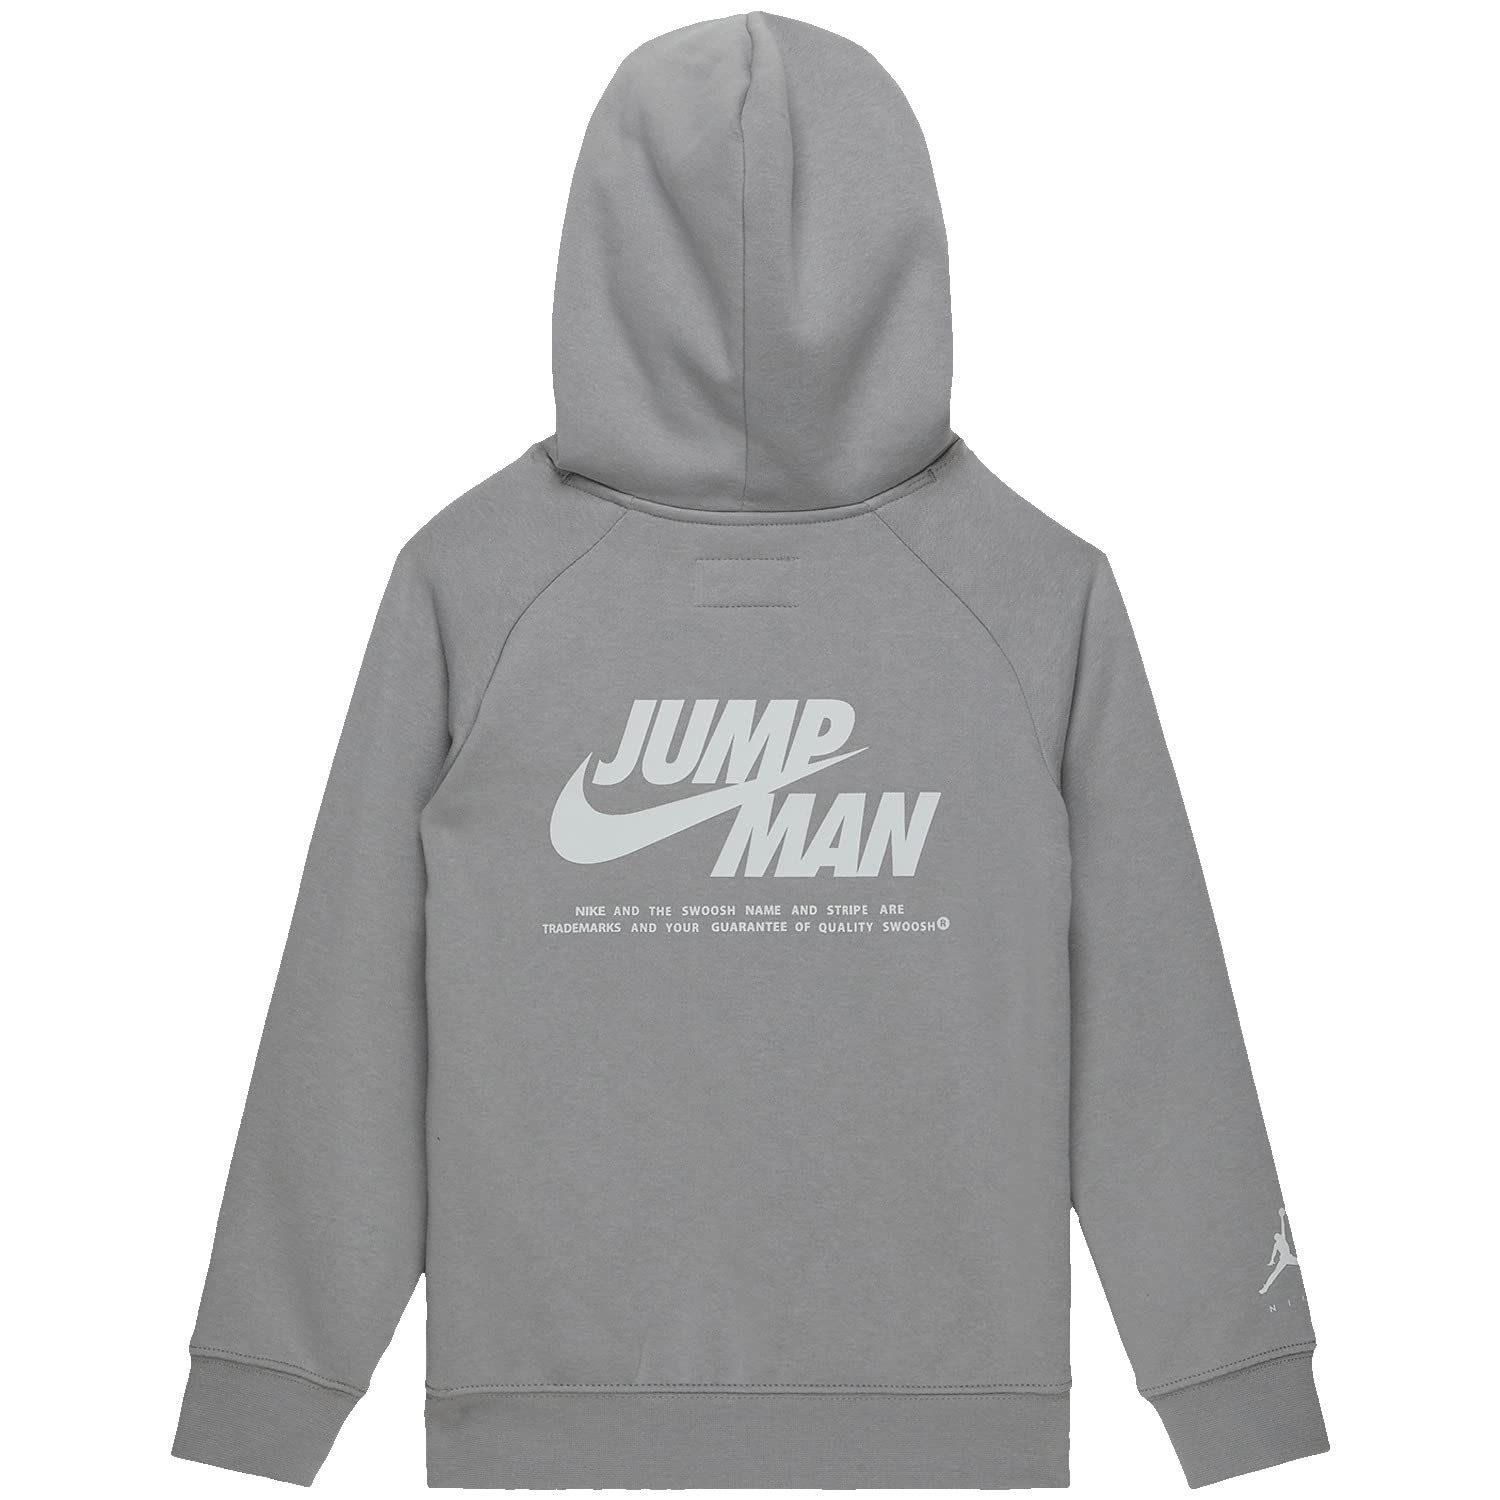 Image 2 of Jumpman X Nike Pullover Hoodie (Toddler/Little Kids)